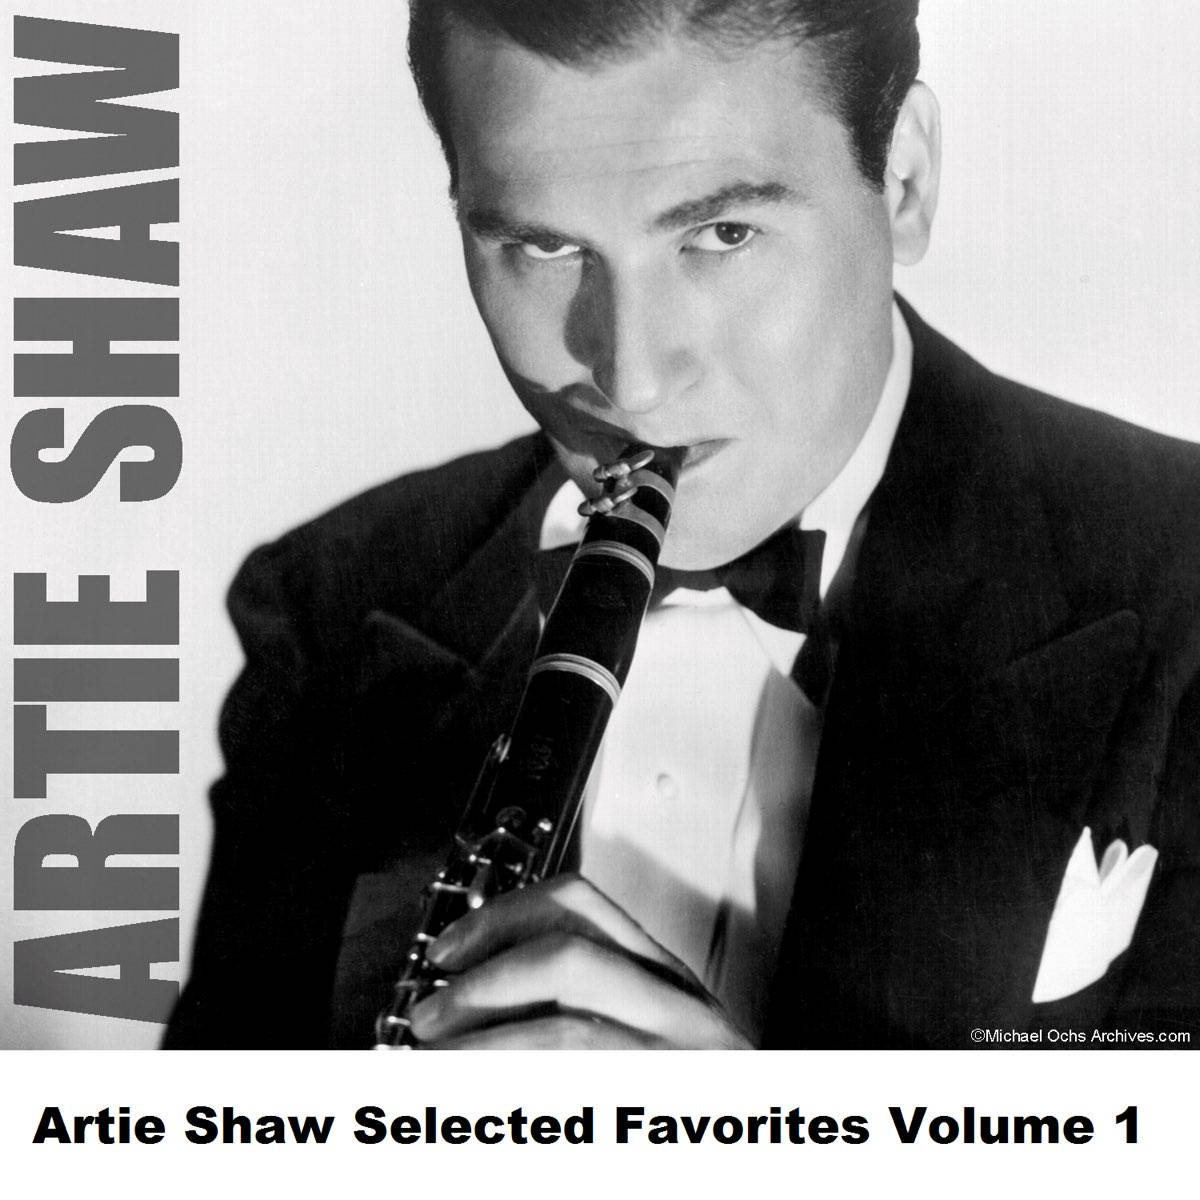 Artie Shaw Selected Favorites Volume 1 Album Cover Wallpaper